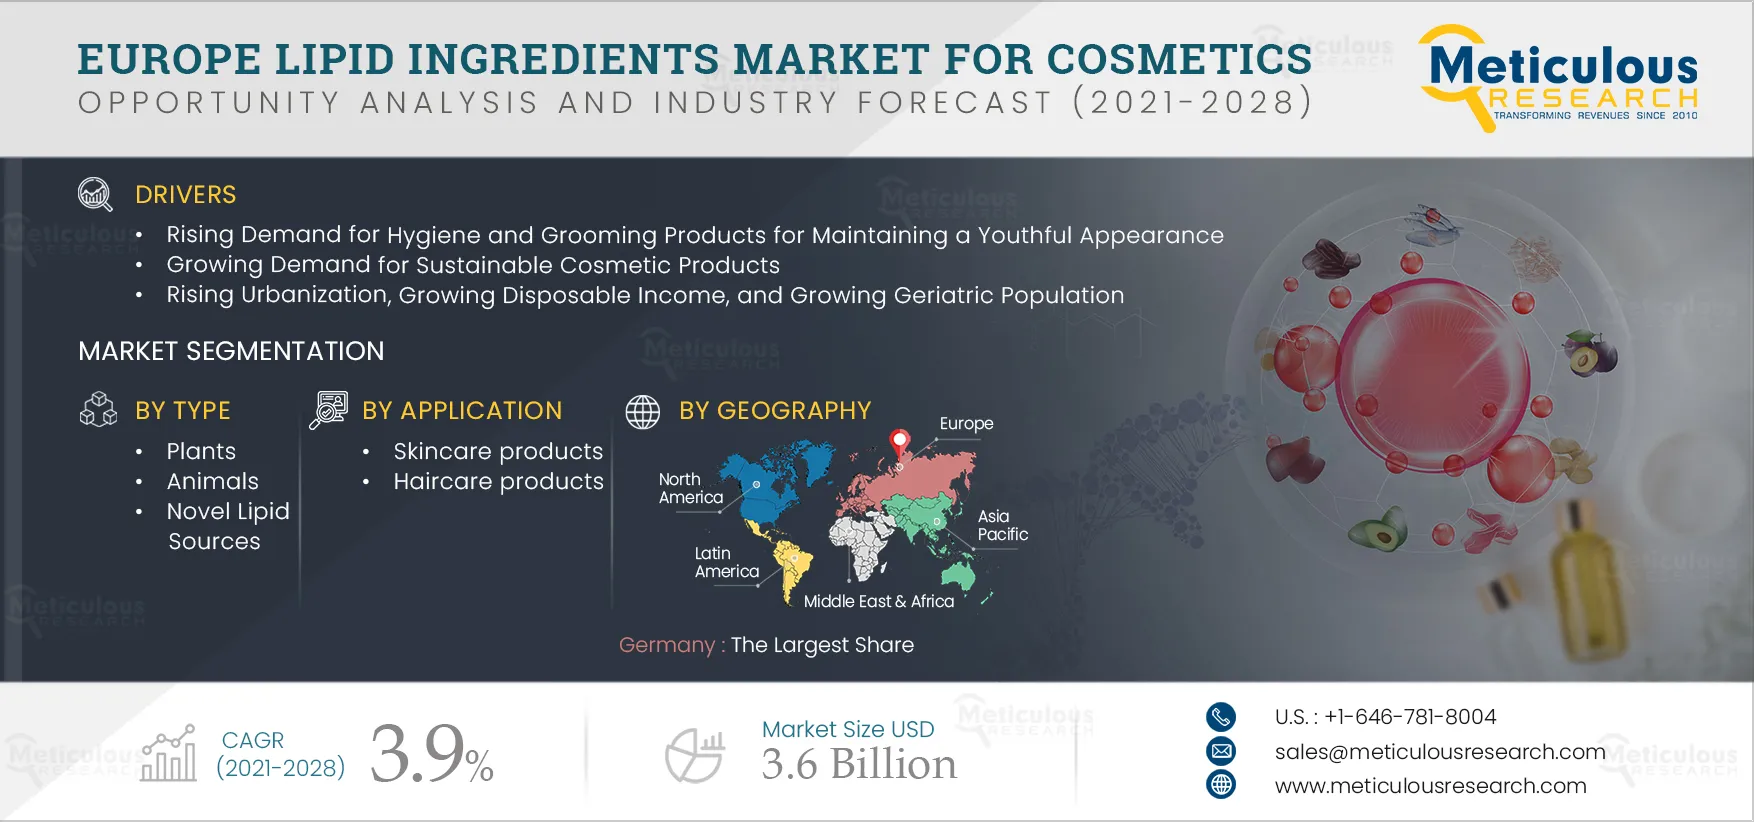 Europe Lipid Ingredients Market For Cosmetics